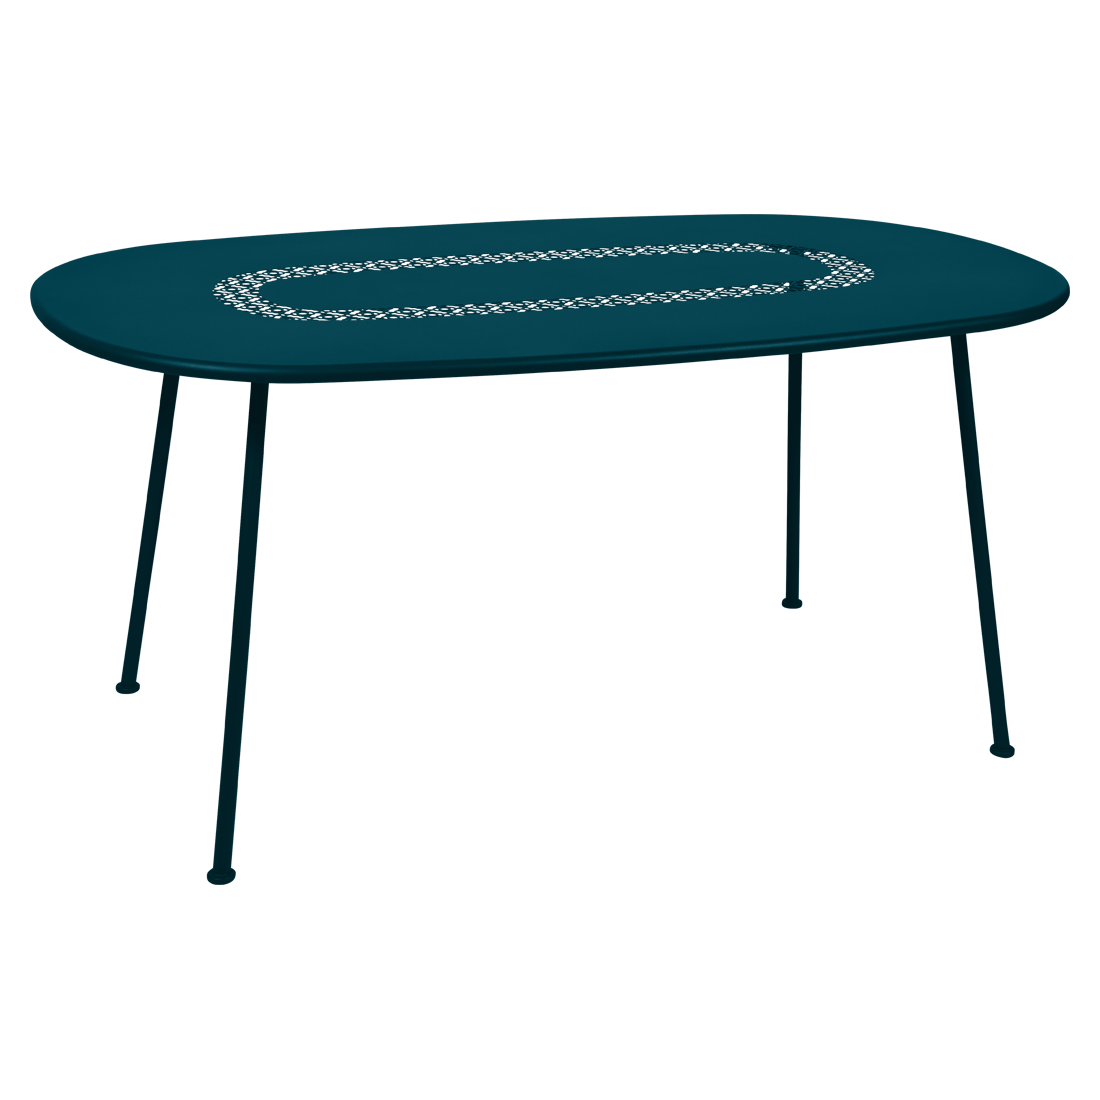 Table Ovale lorette bleu acapulco, table de jardin, table lorette fermob, table metal, table bleu